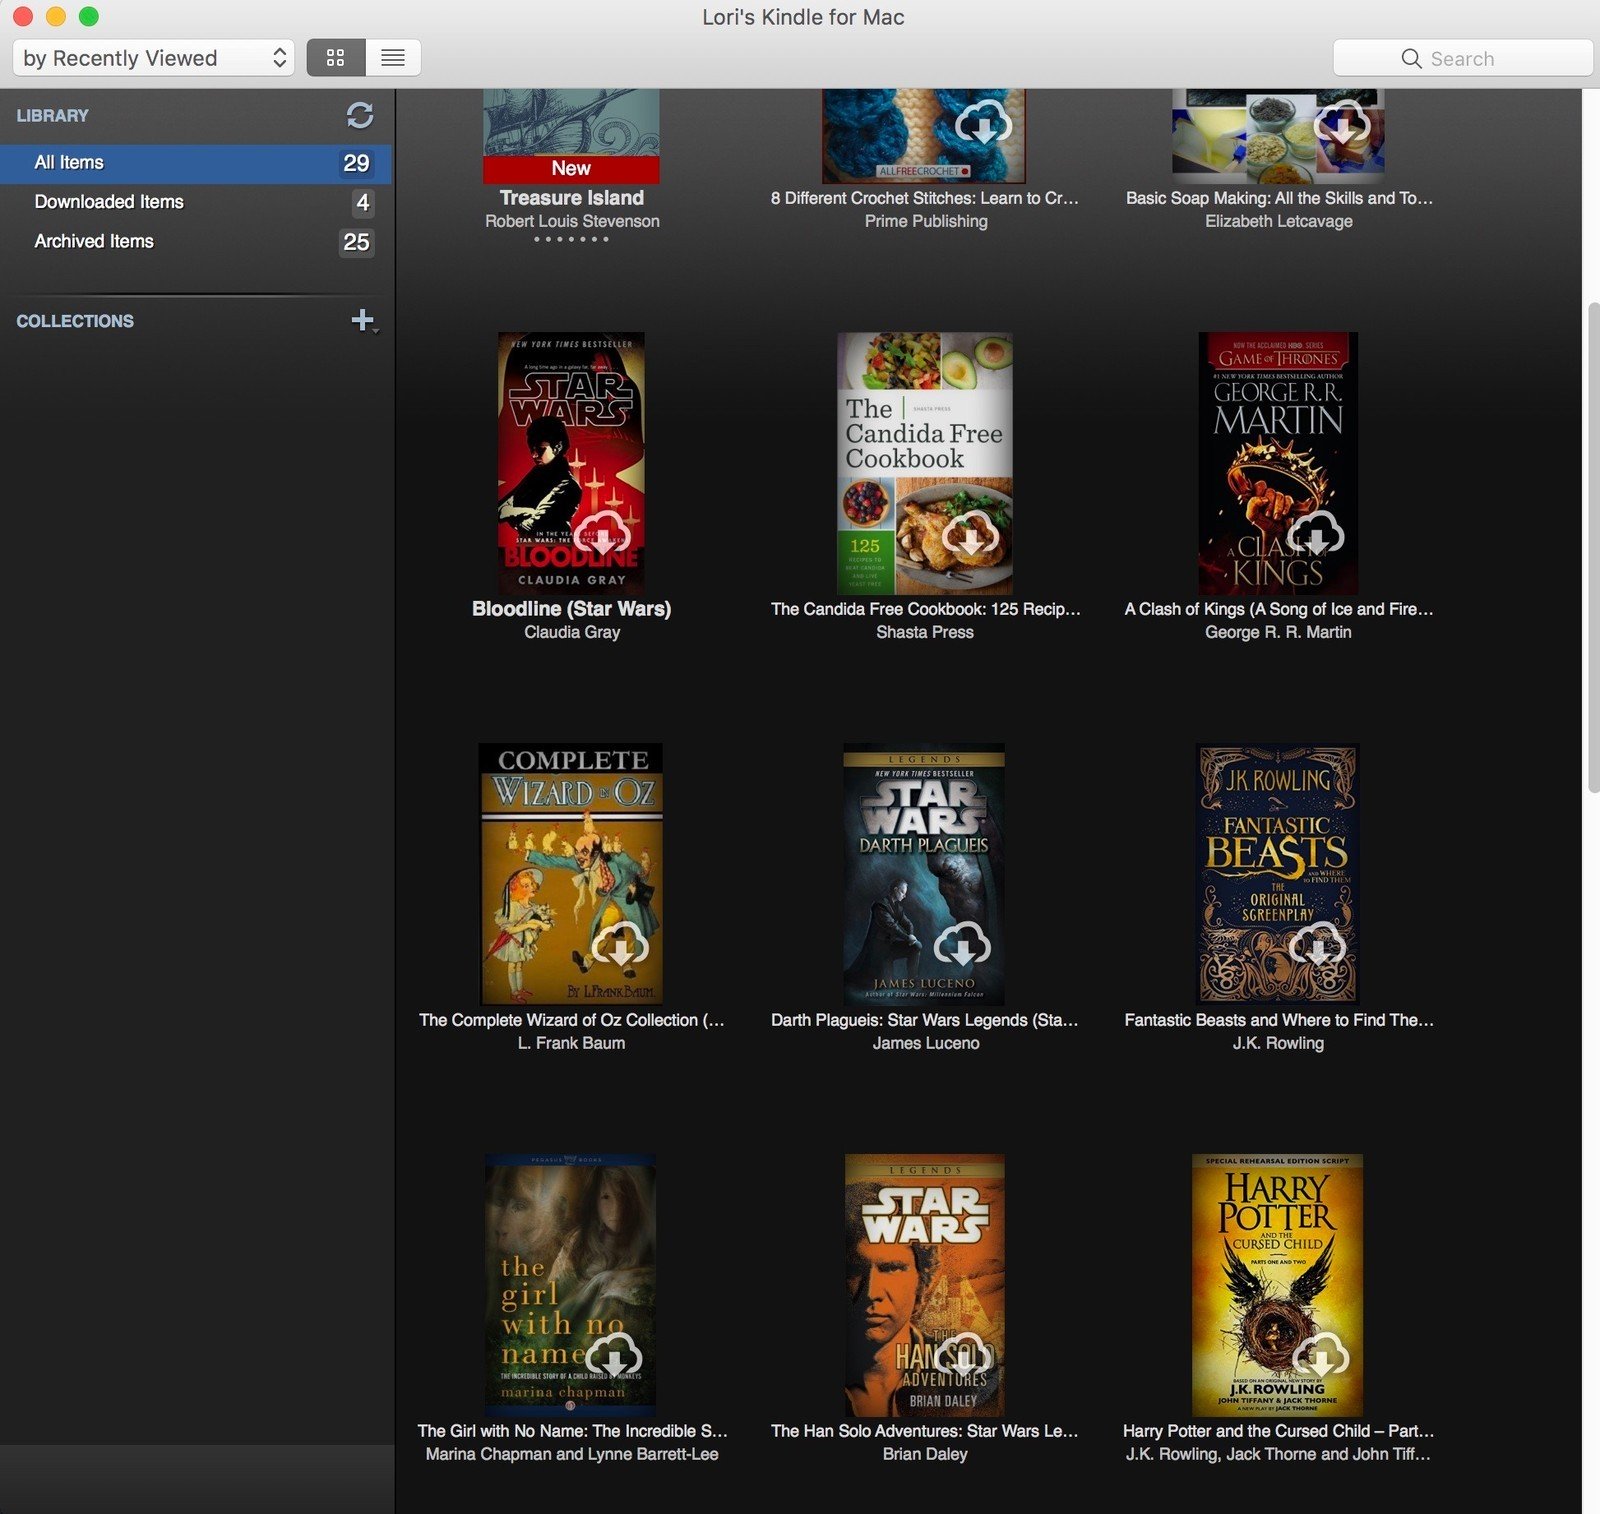 ebook reader mac download free